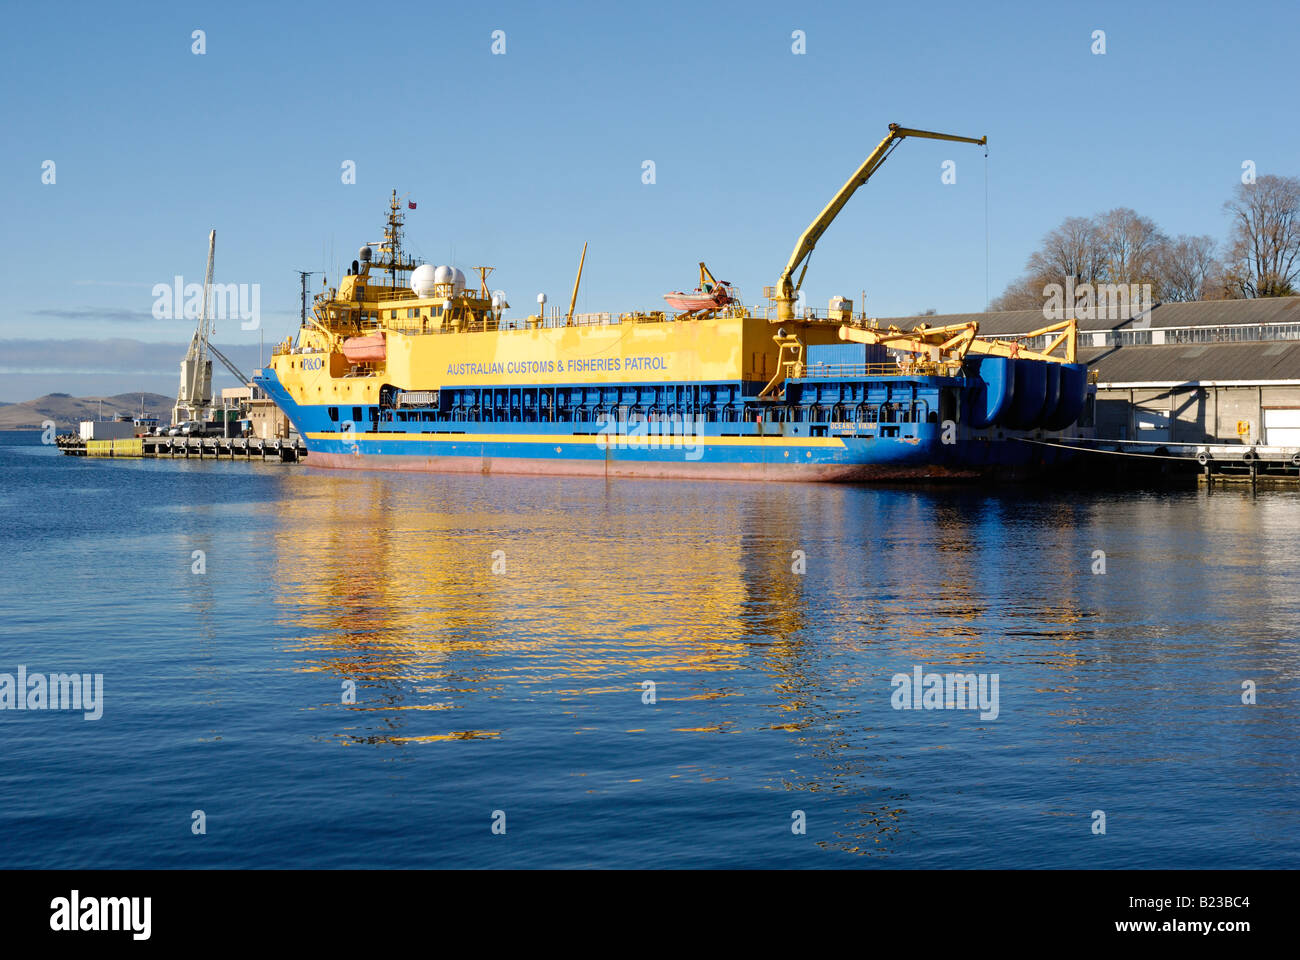 Australian Customs and Fisheries vessel the Oceanic Viking in home port of Hobart Tasmania Stock Photo